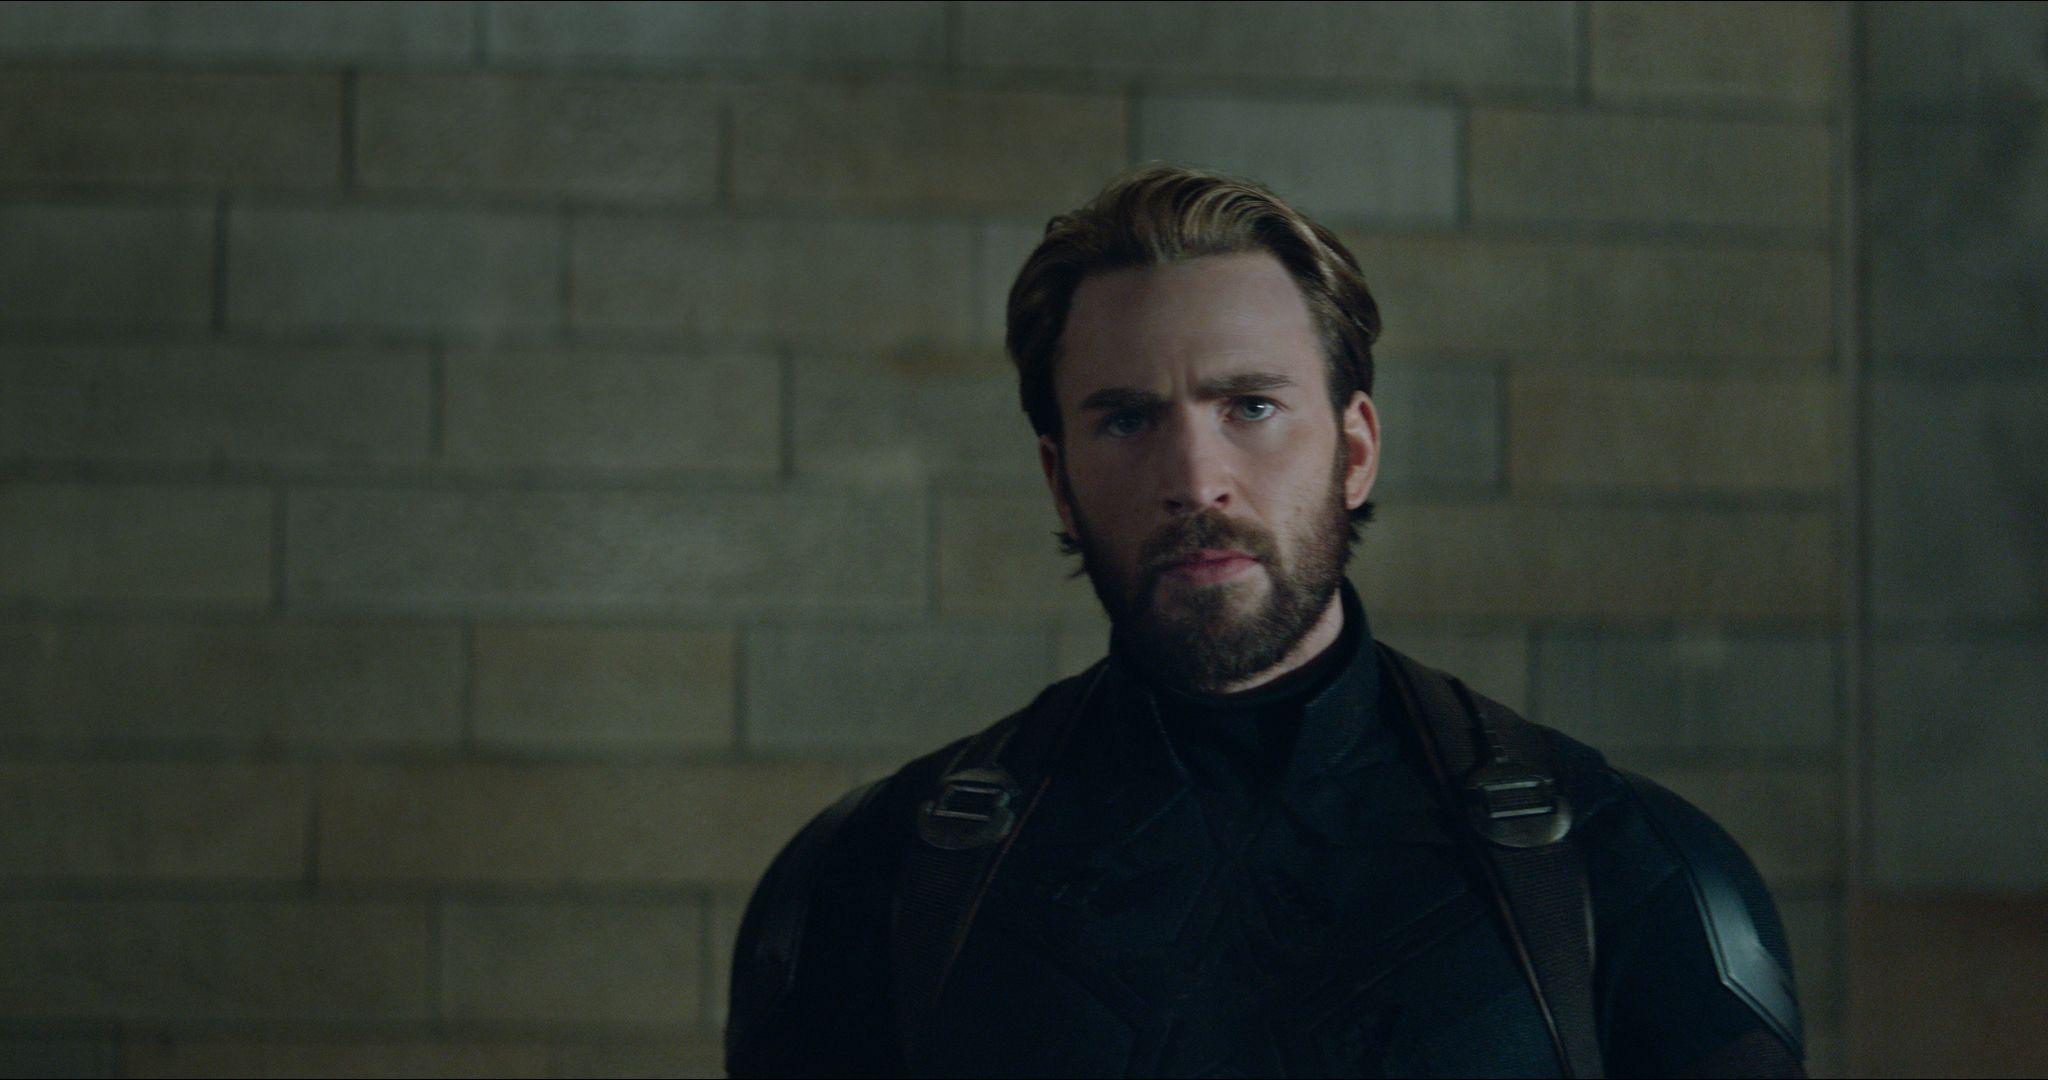 Captain America Infinity War Wallpapers